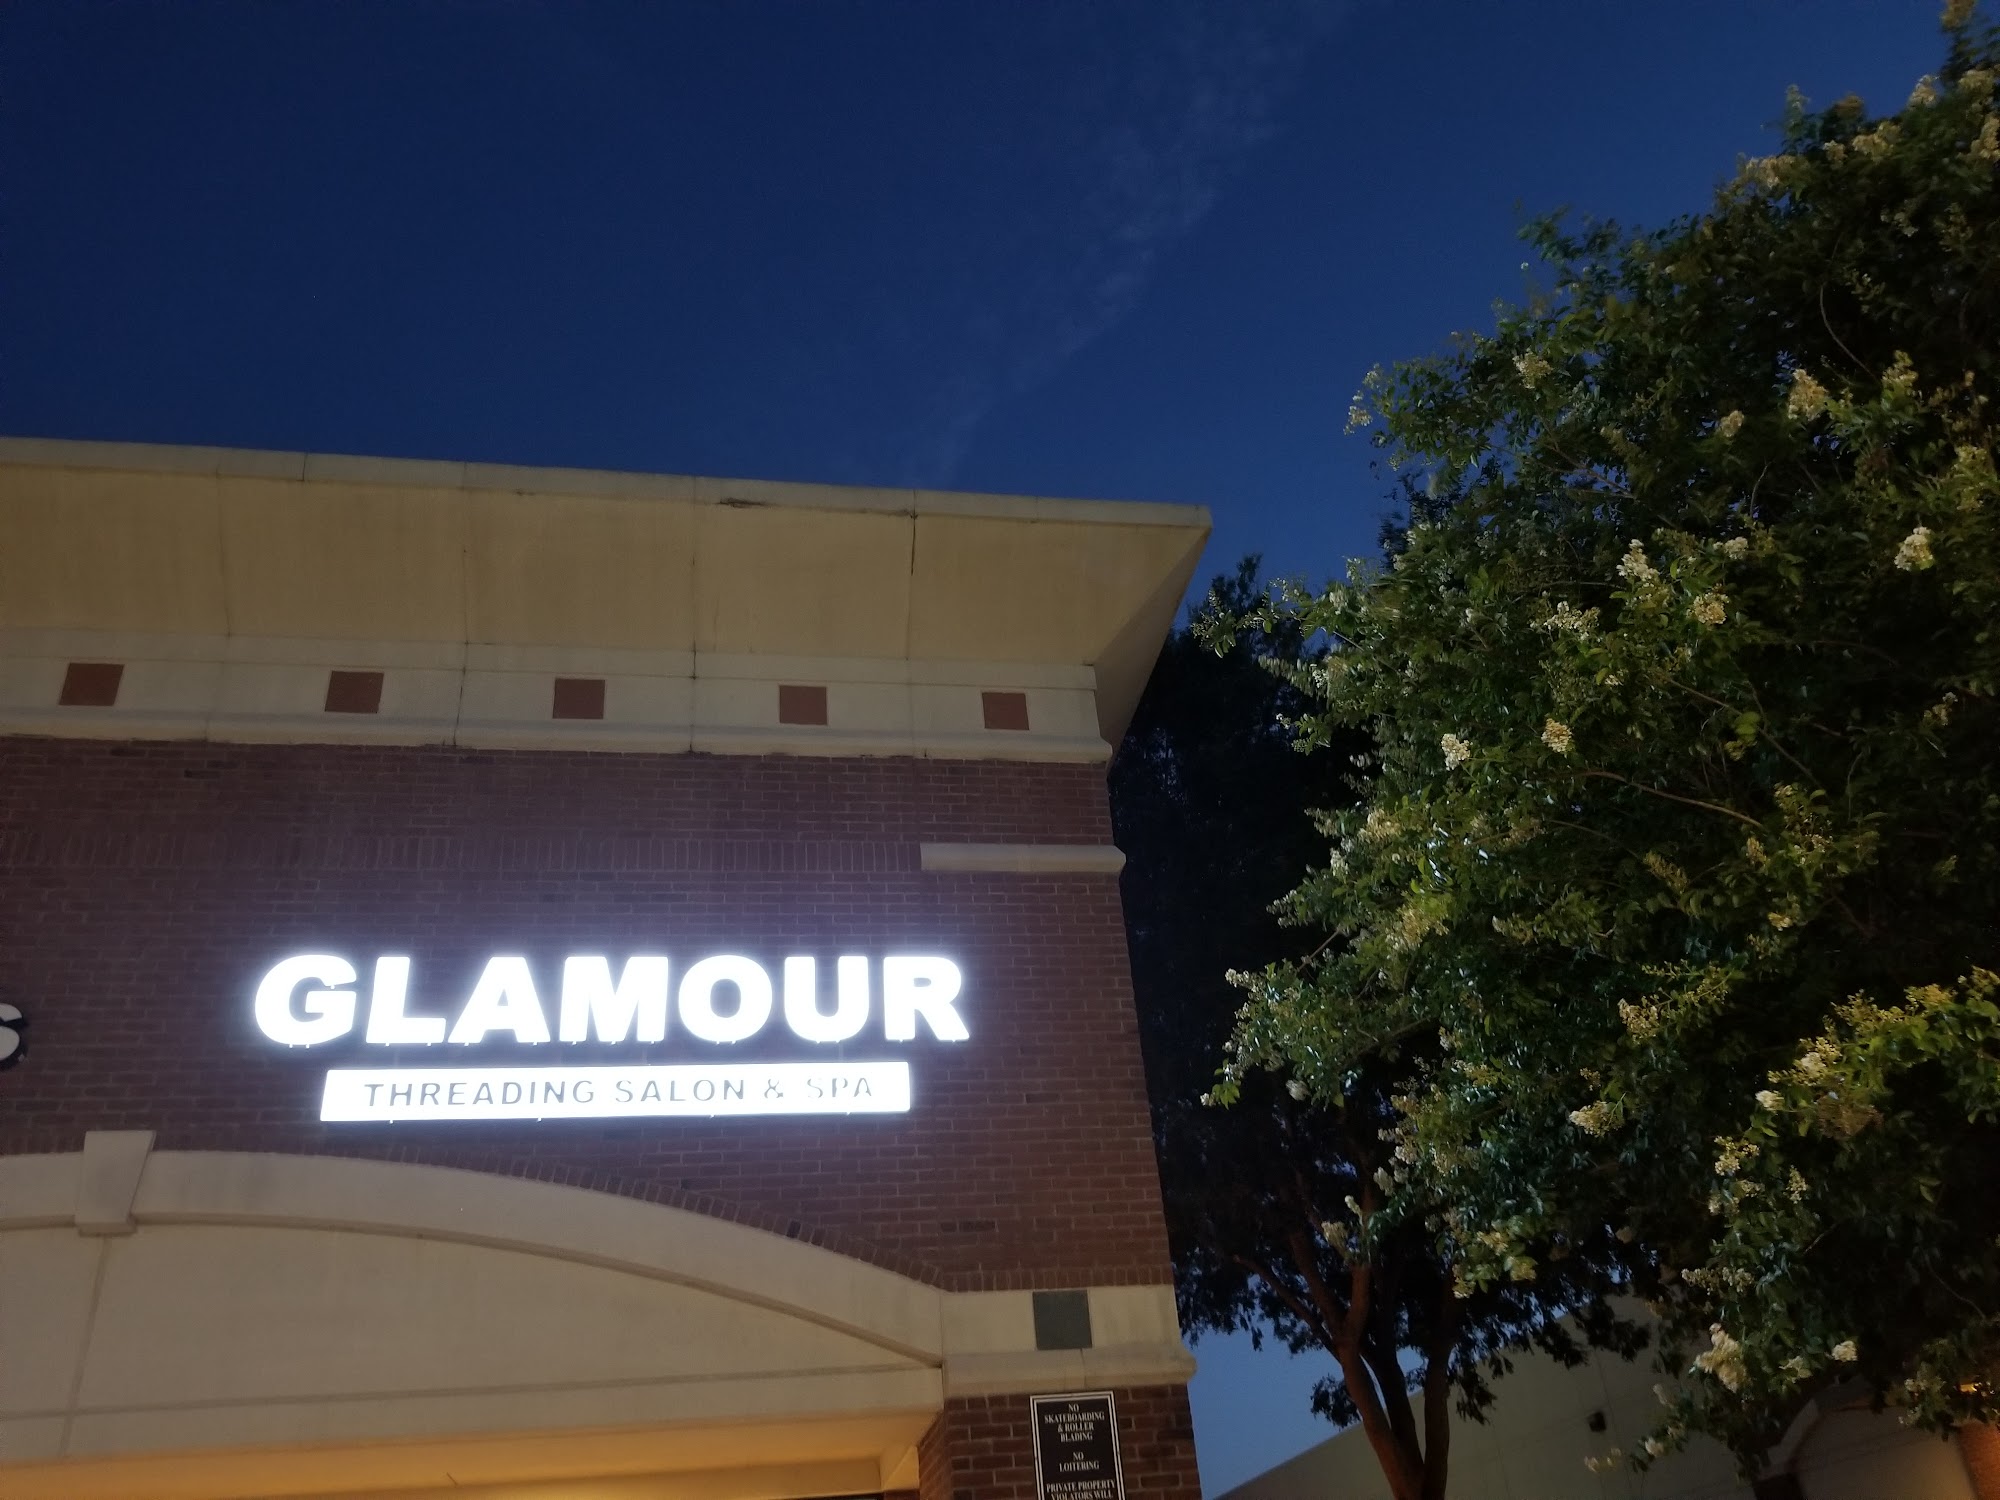 Glamour Threading Salon & spa